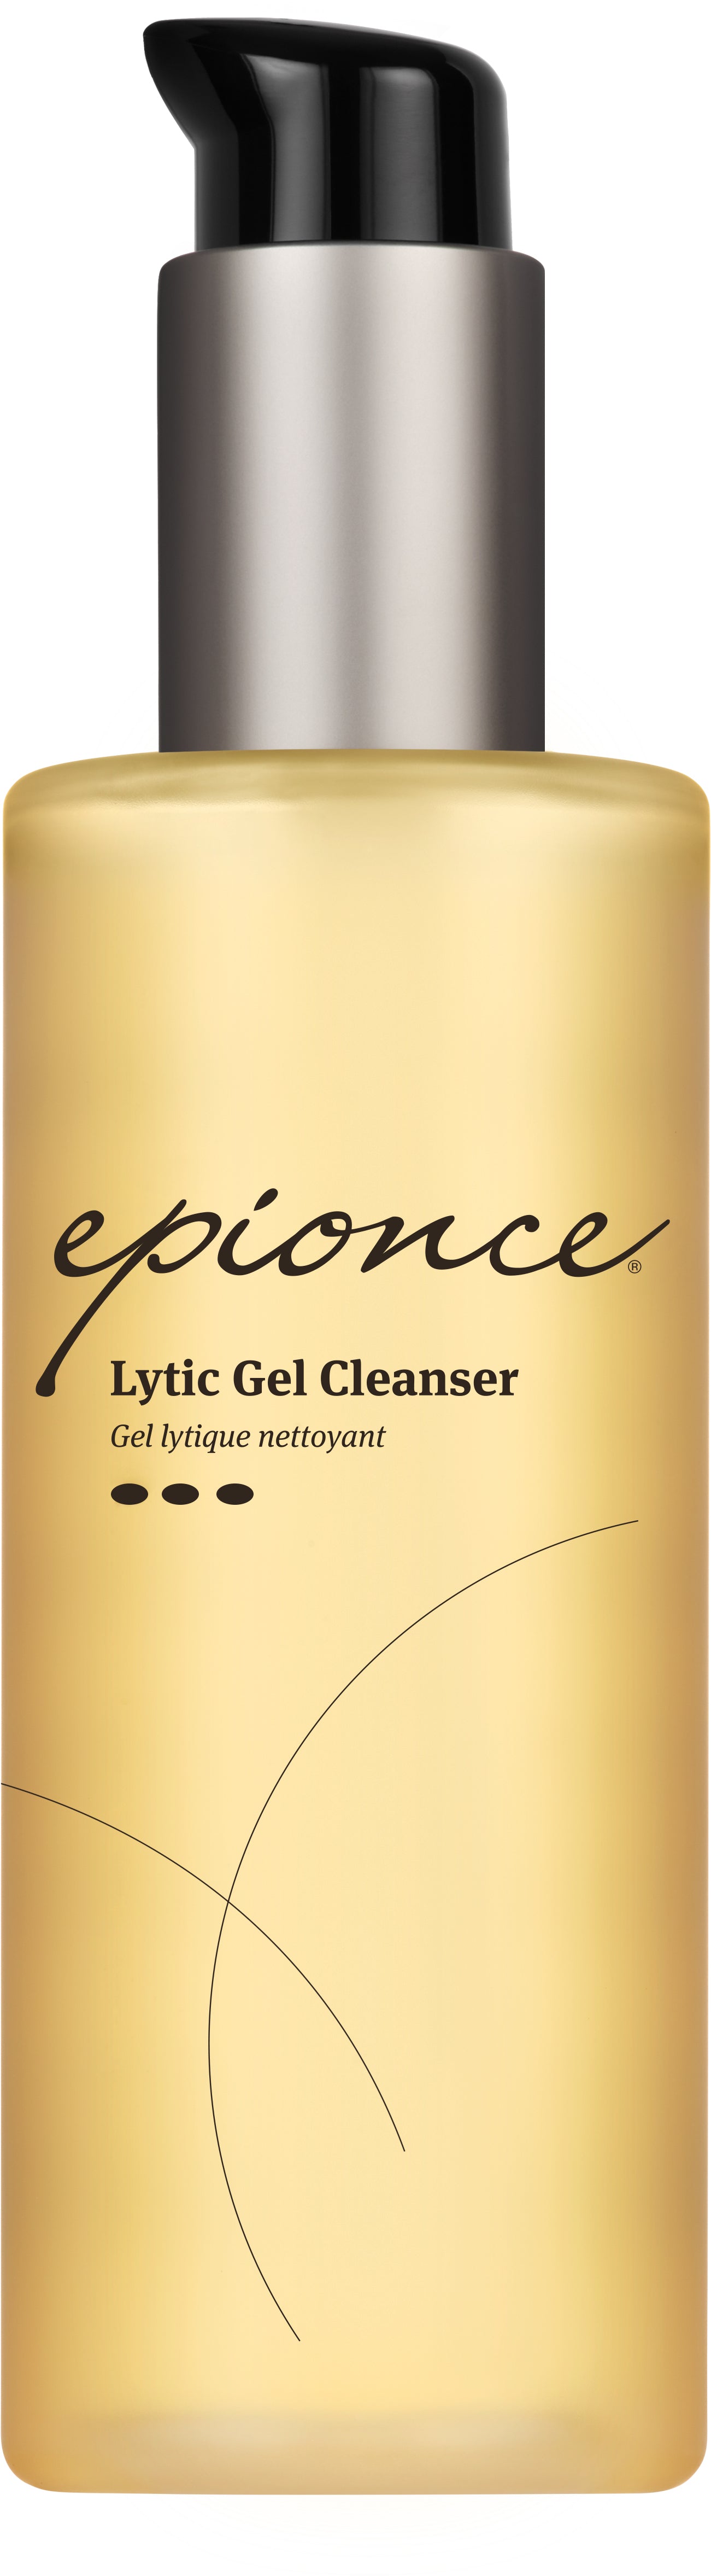 Epionce | Lytic Gel Cleanser (170ml)